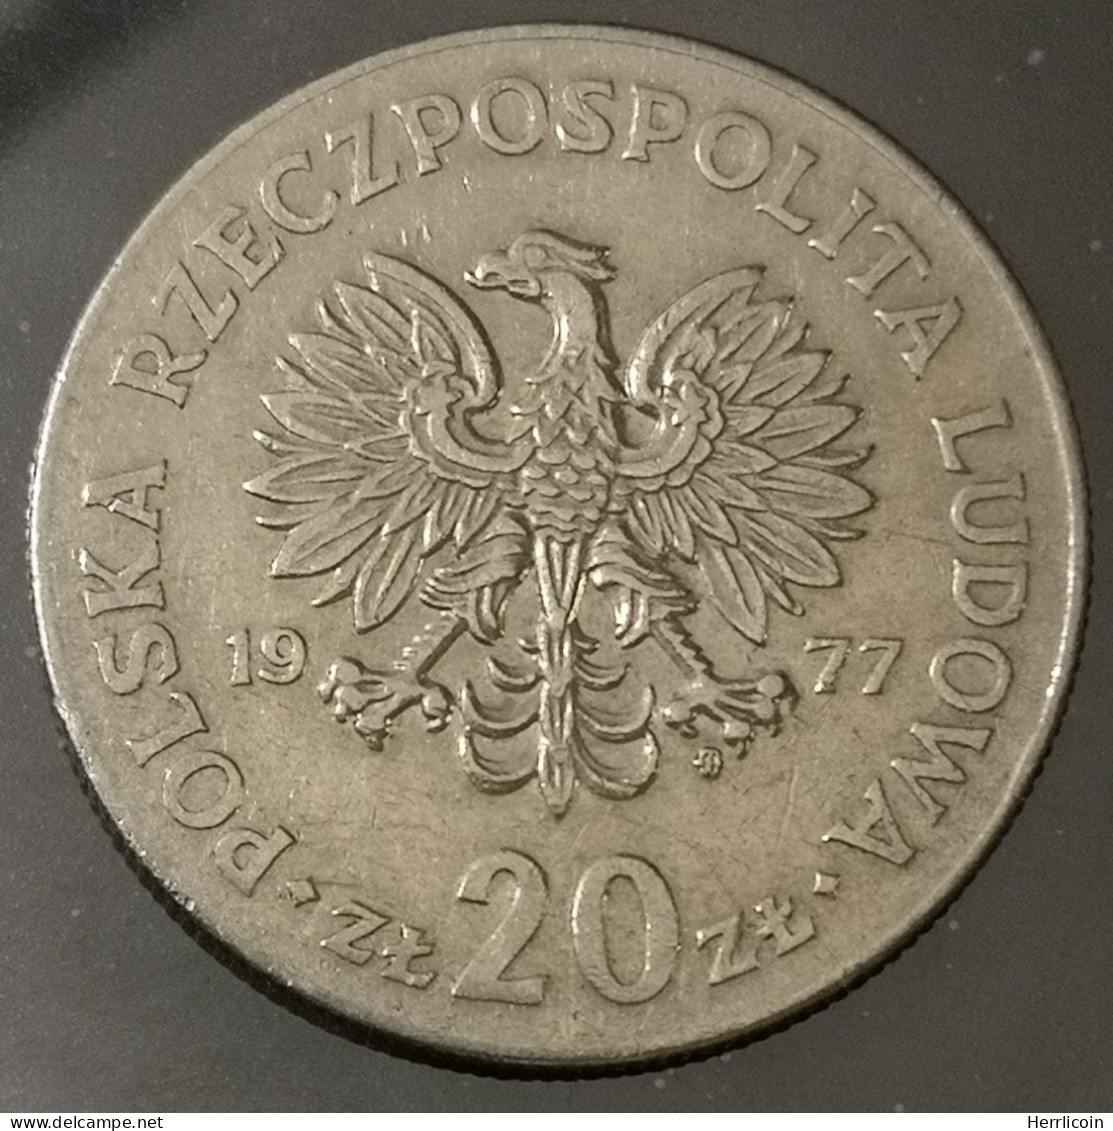 Monnaie Pologne - 1977 - 20 Zlotych Nowotko MW - Polonia